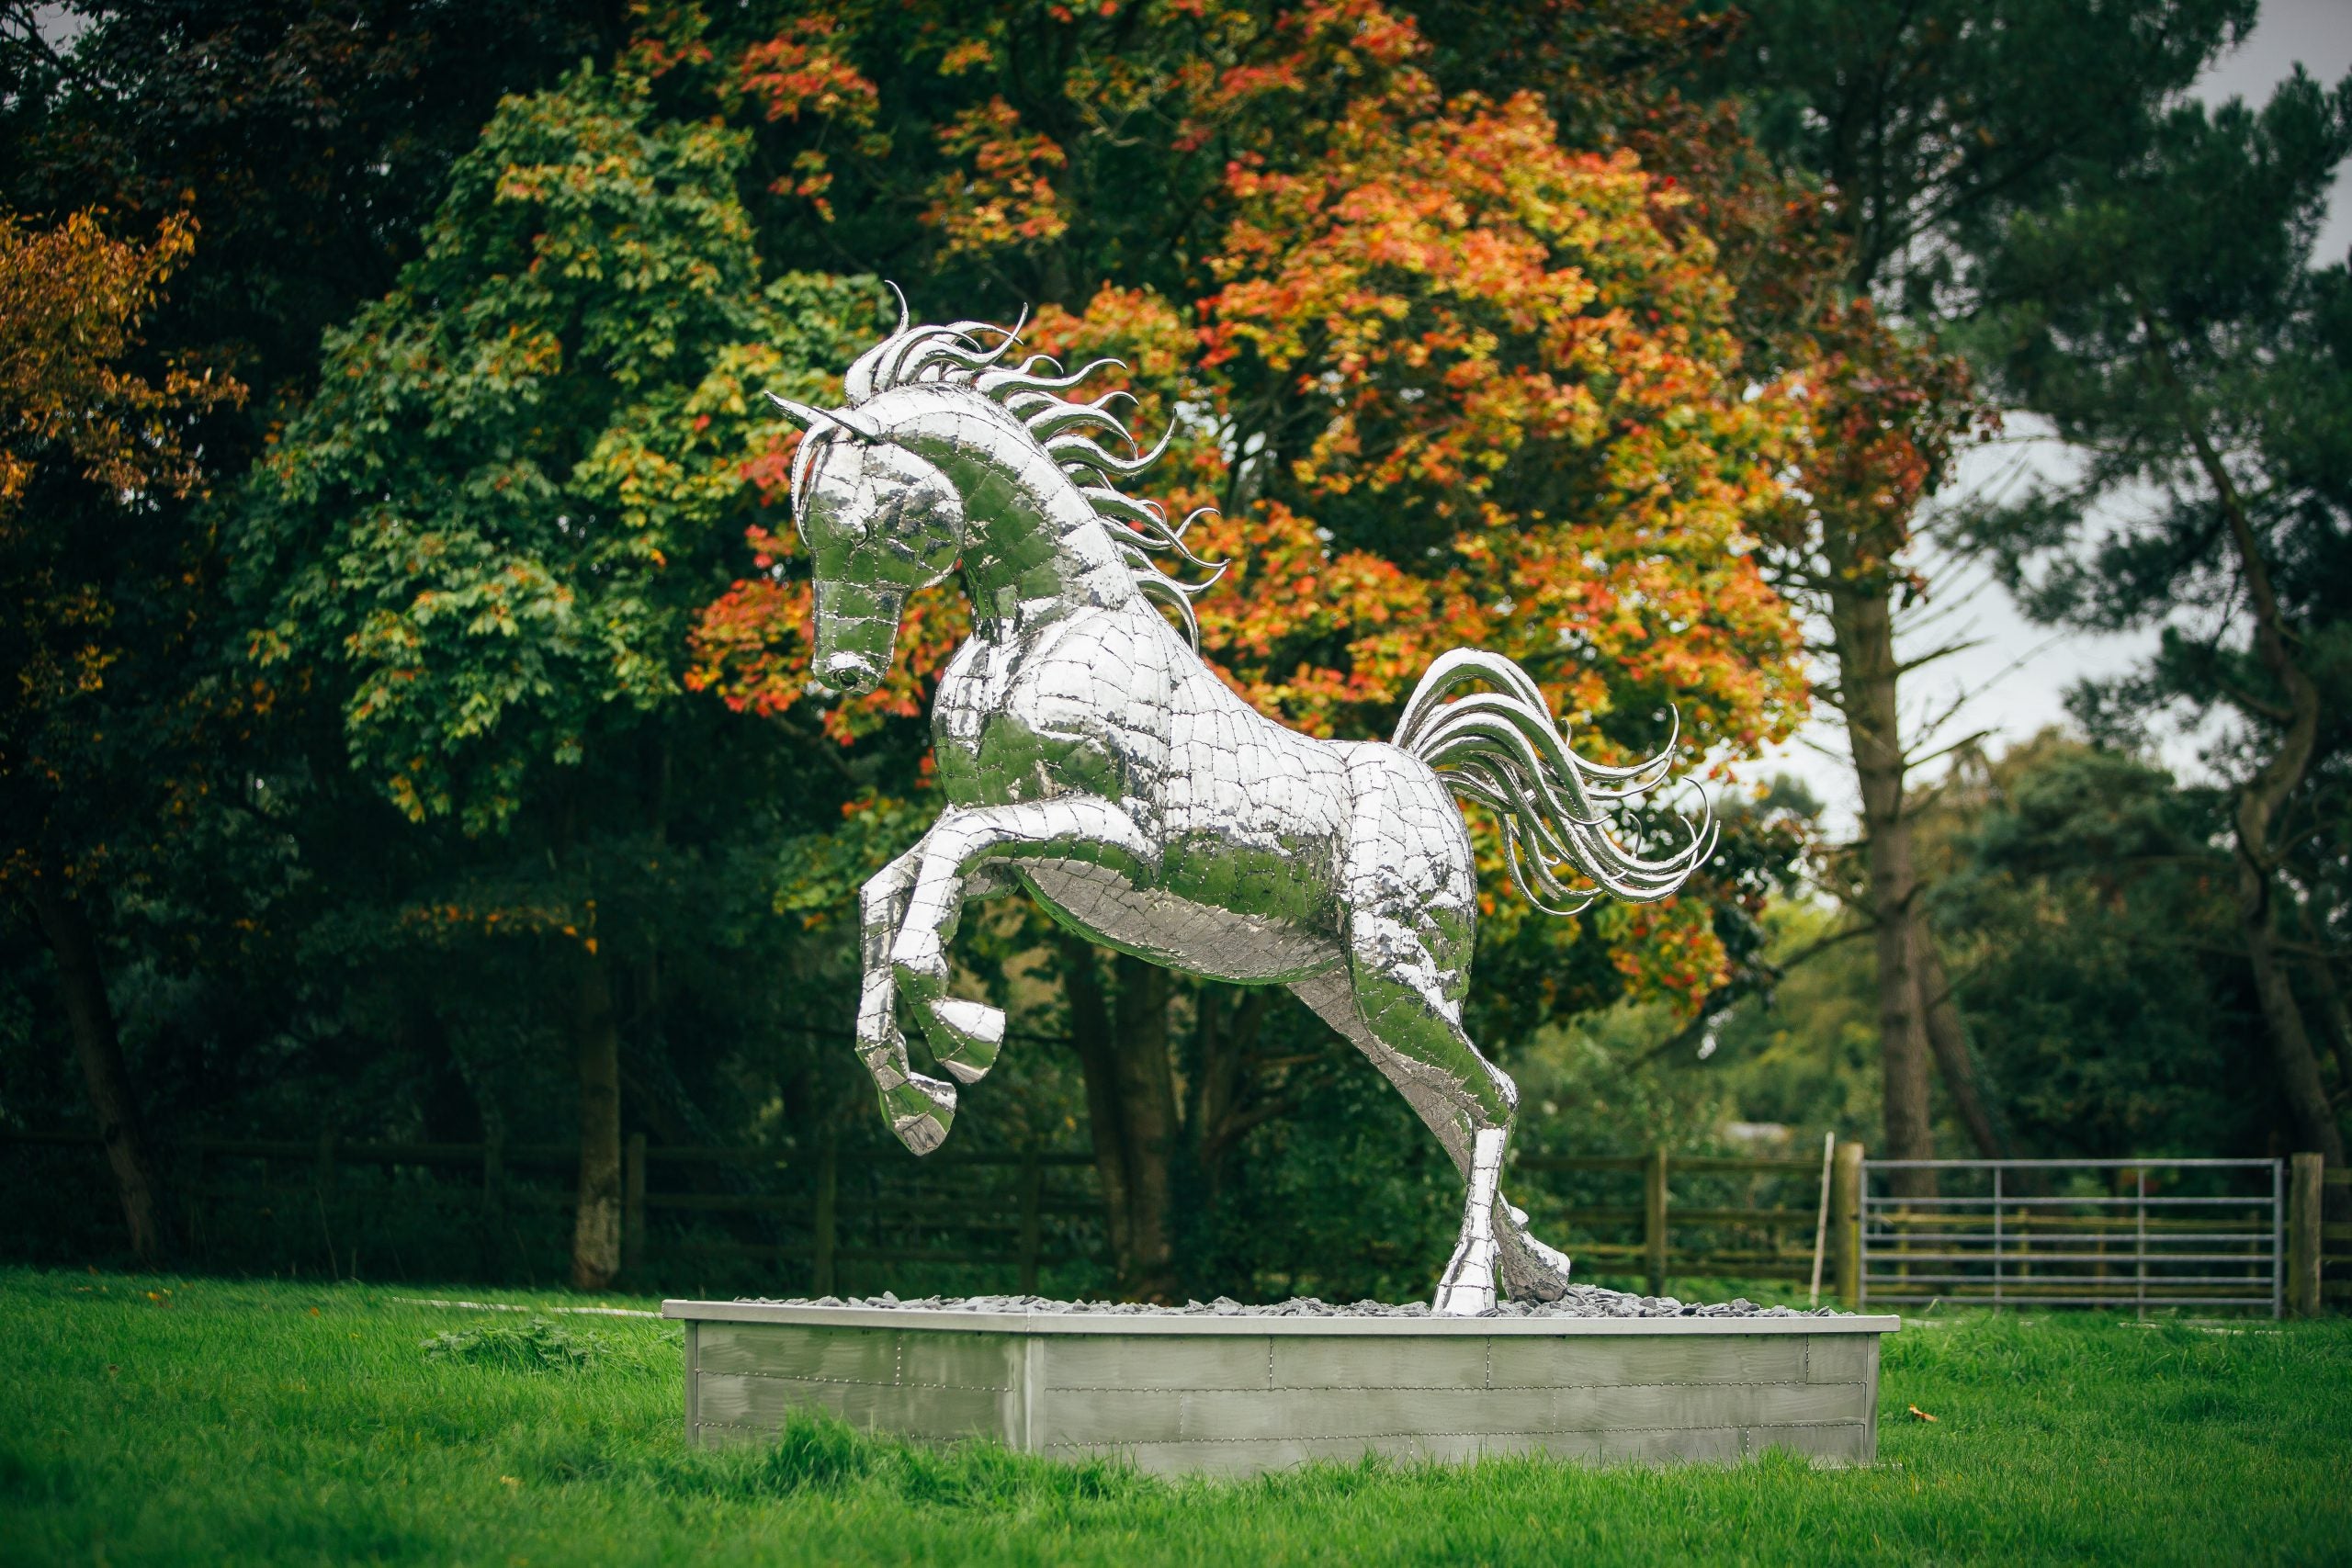 Michael Turner- Stainless Steel Prancing Horse Sculpture